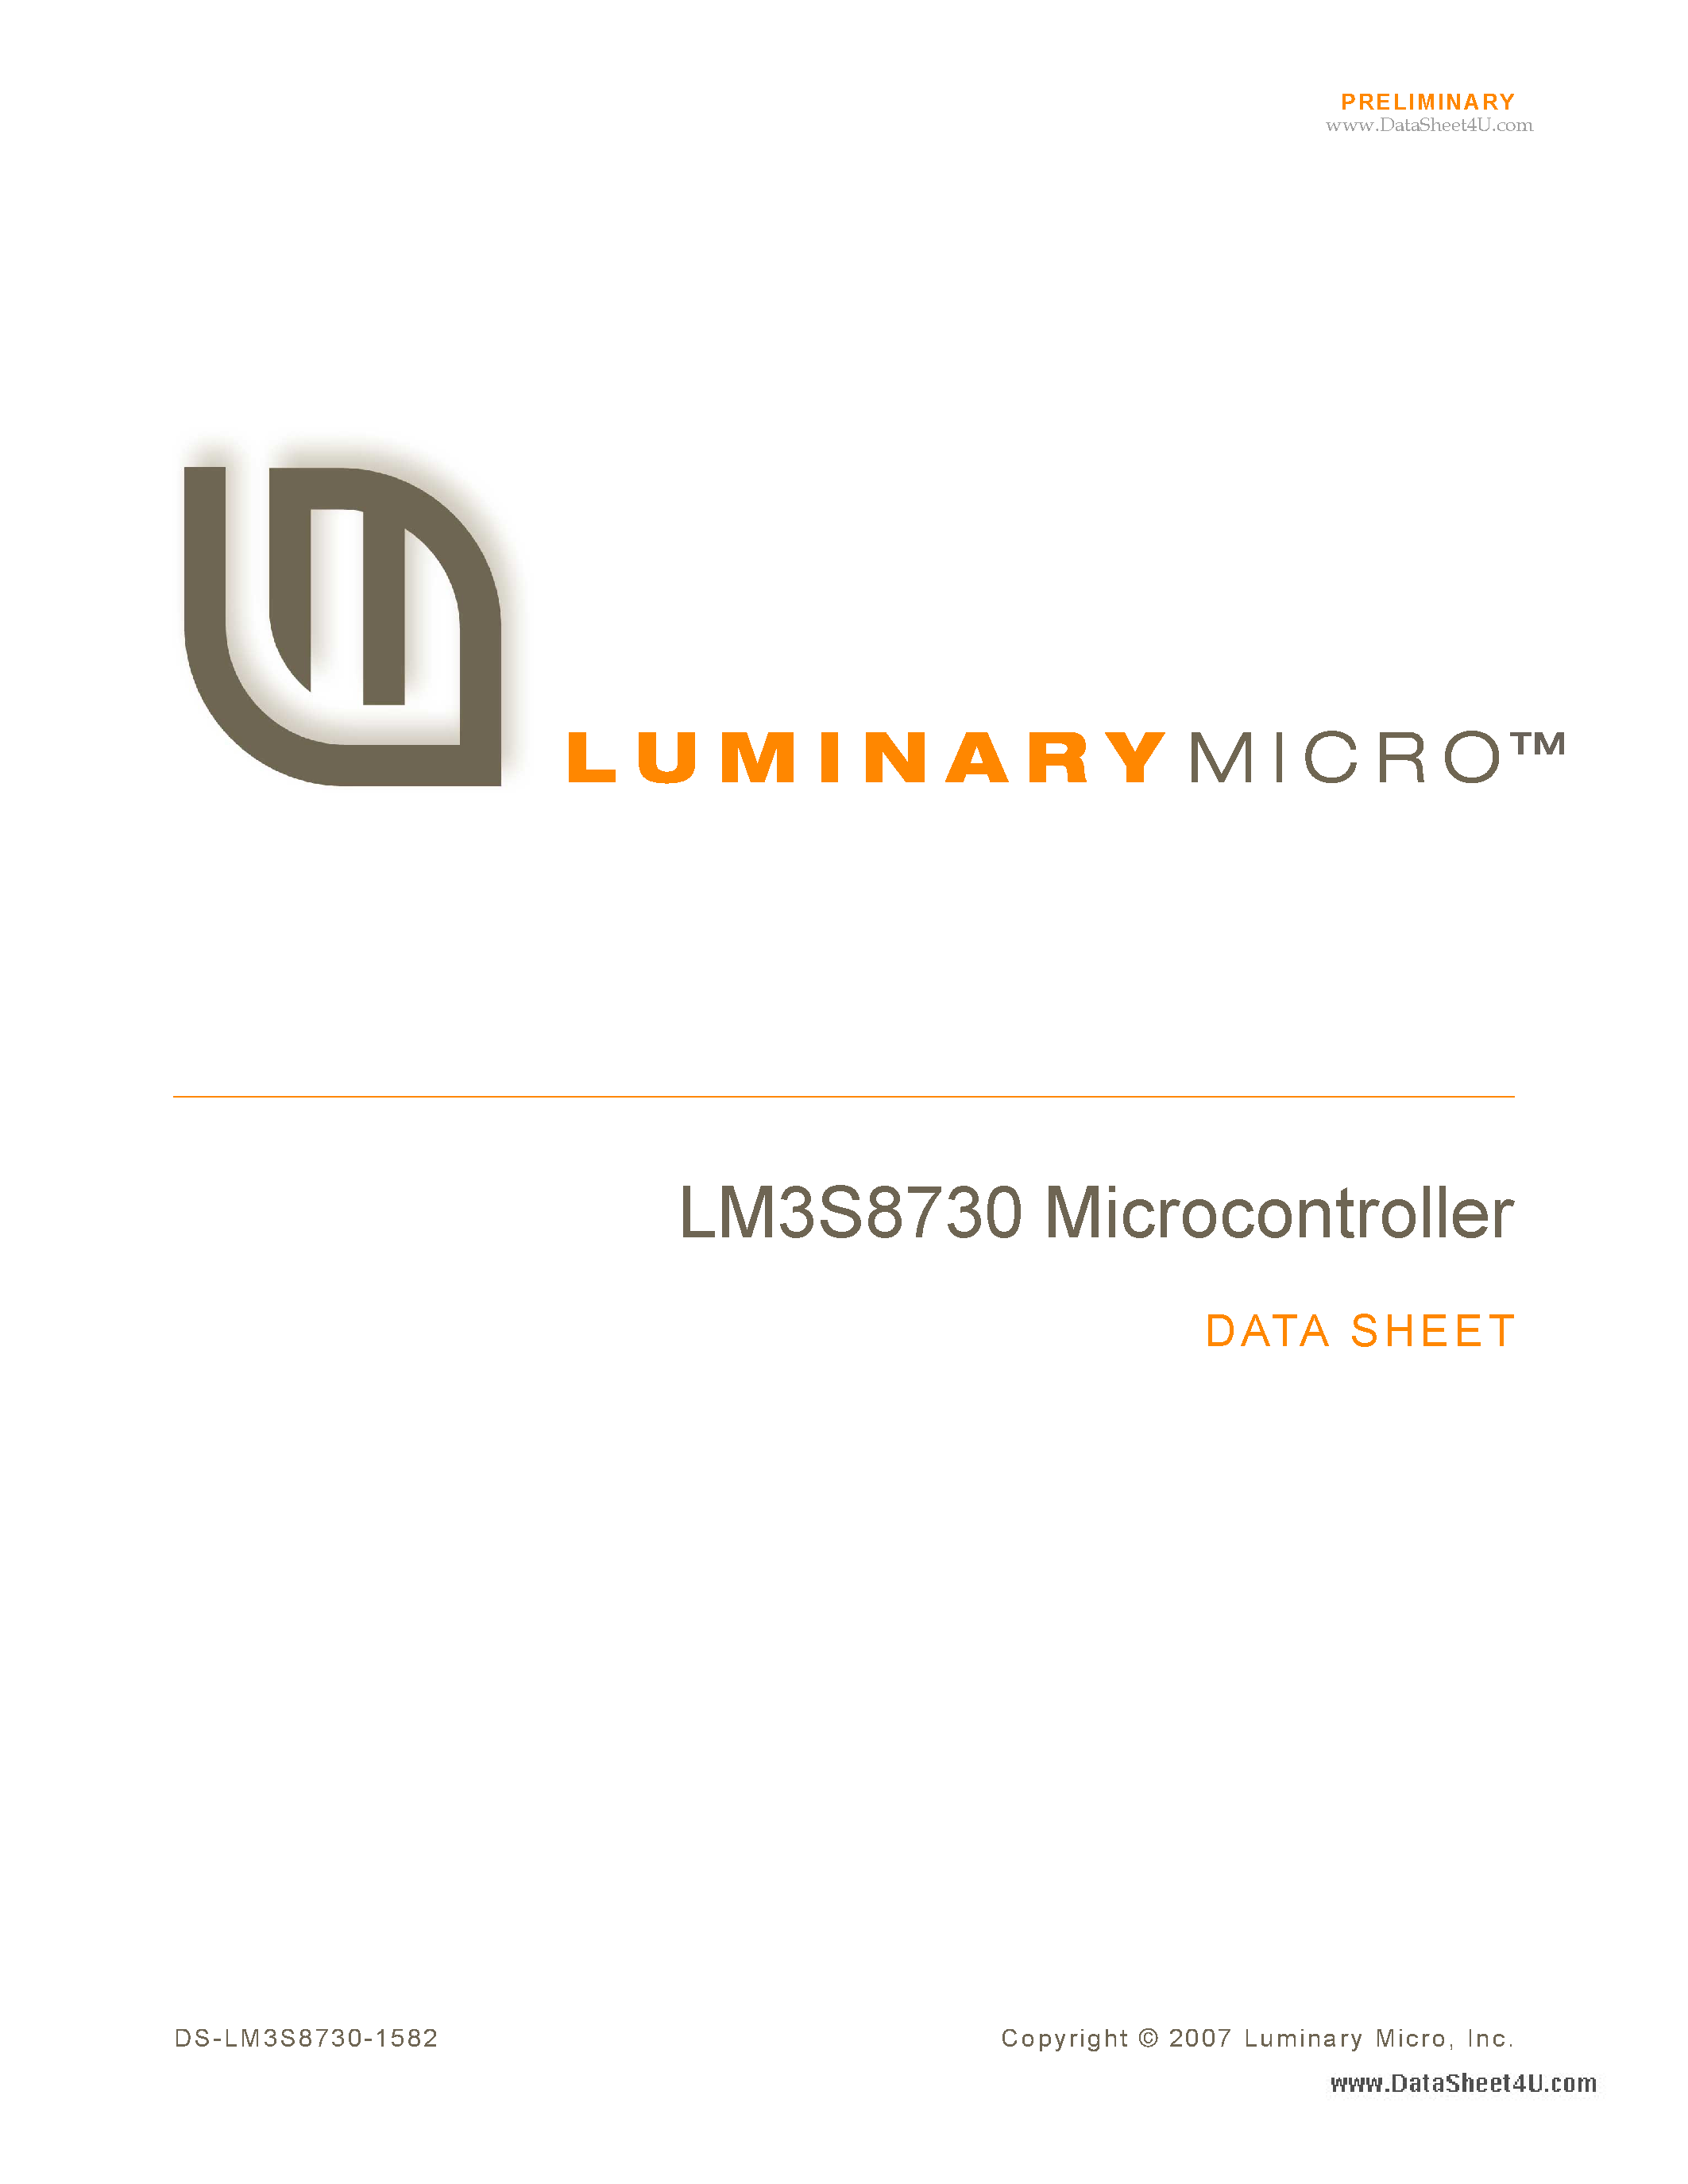 Даташит LM3S8730 - Microcontroller страница 1